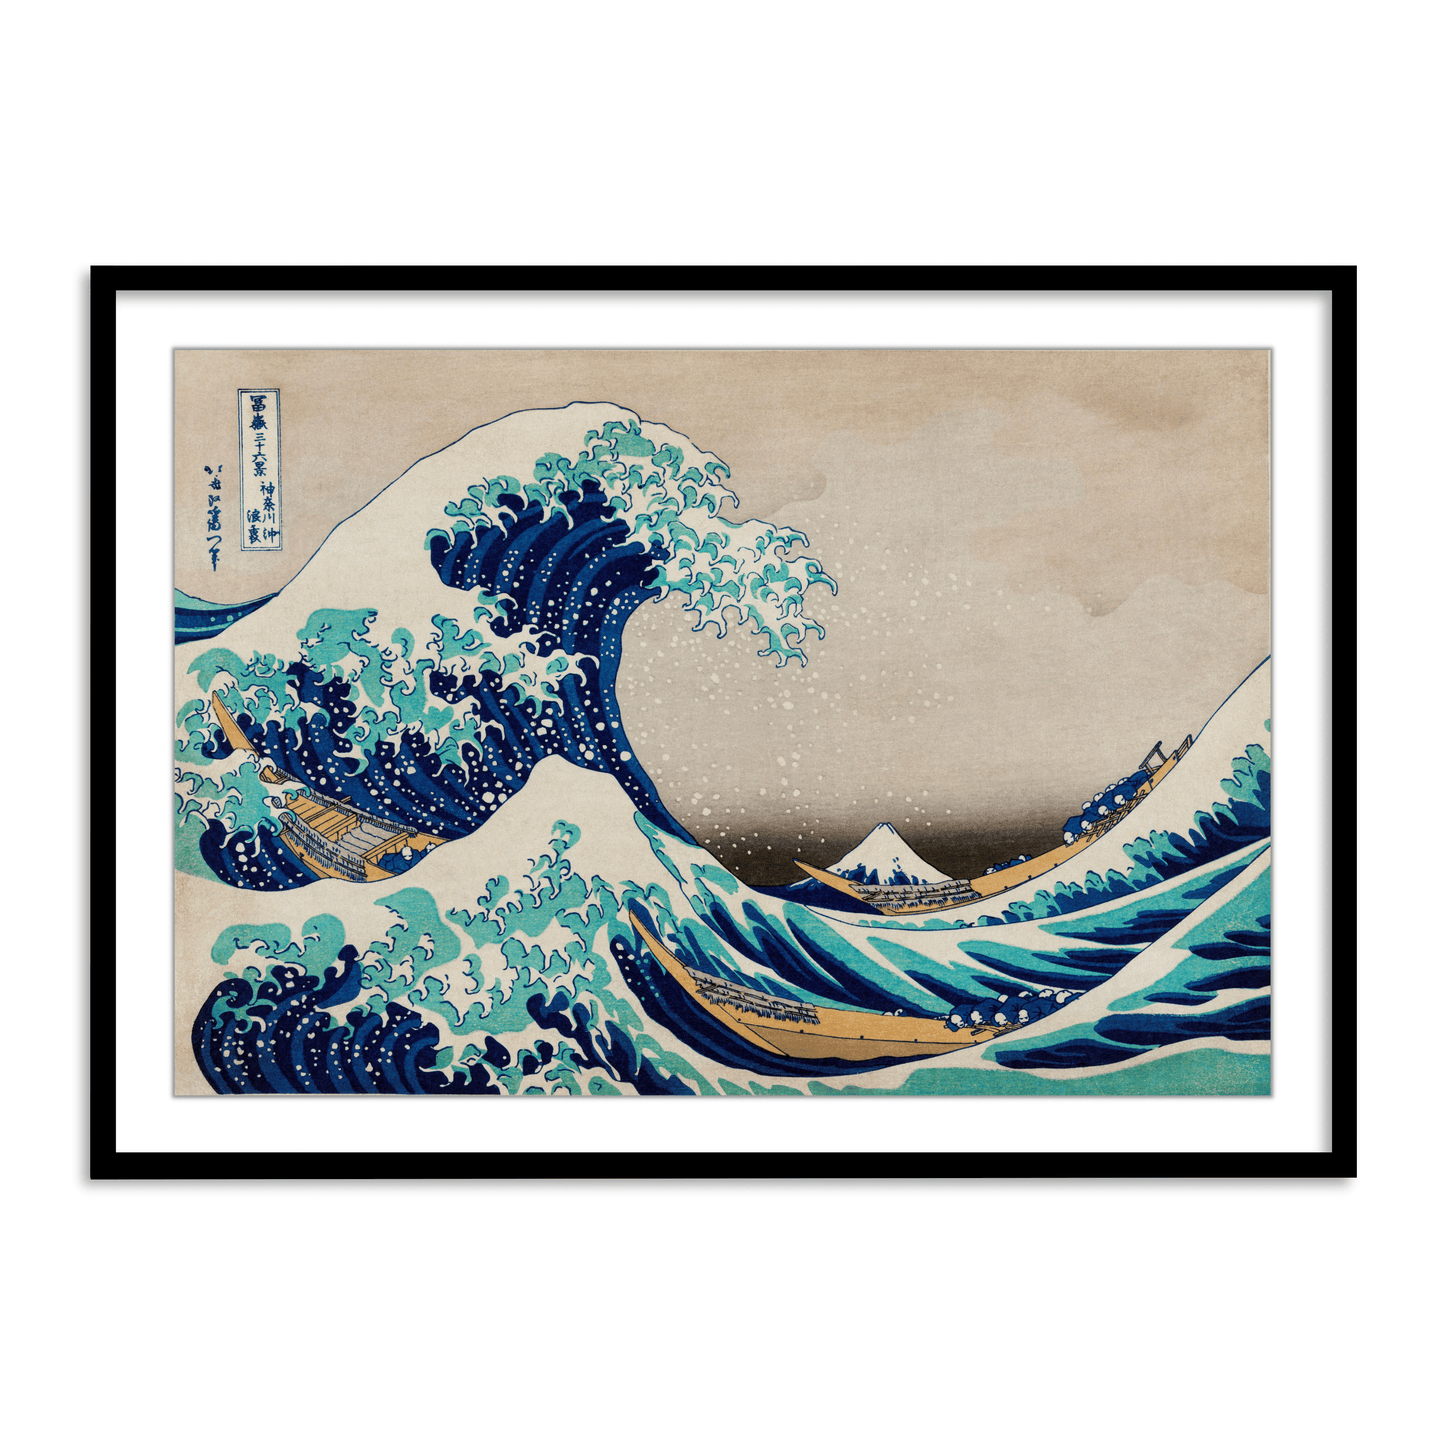 The Great Wave off Kanagawa vintage illustration by Katsushika Hokusai